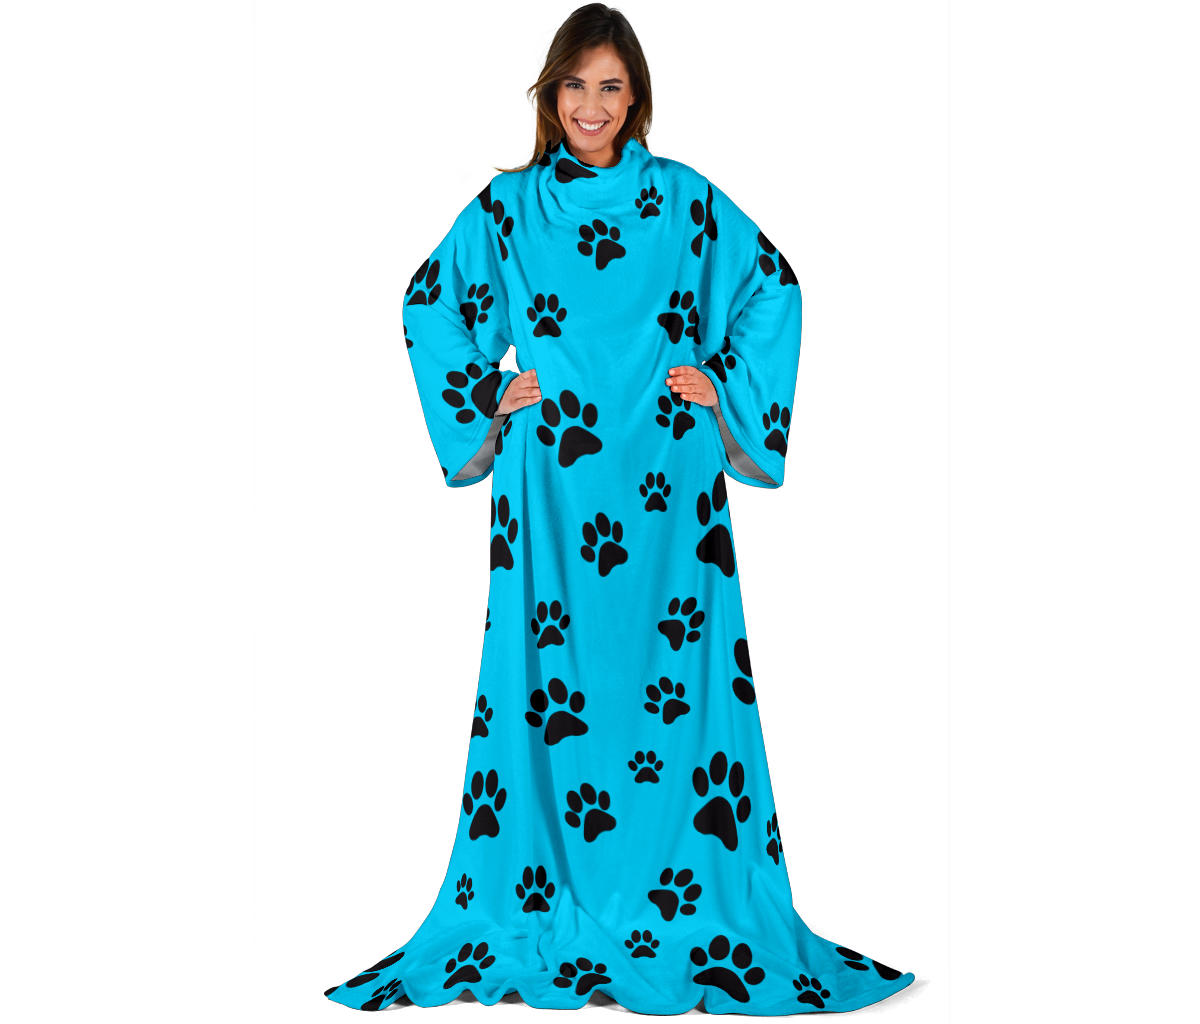 Paw Prints Adult Sleeve Blanket - Turquoise